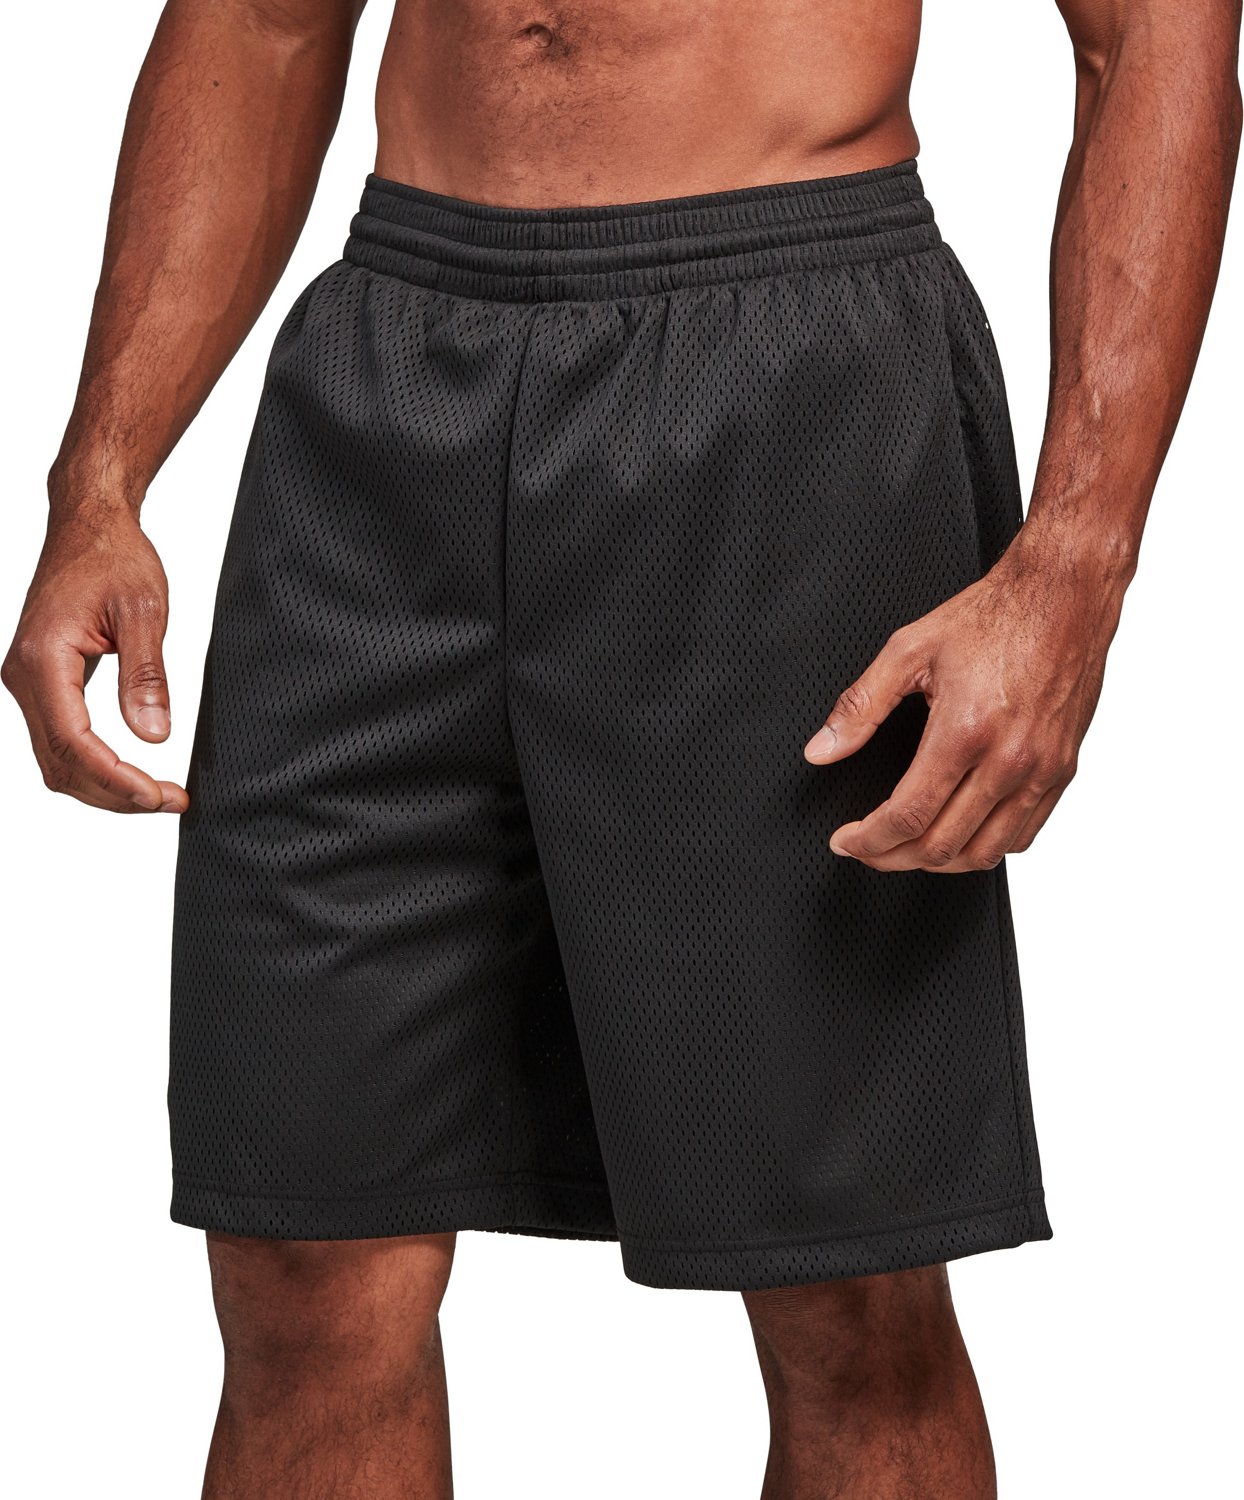 academy men's shorts